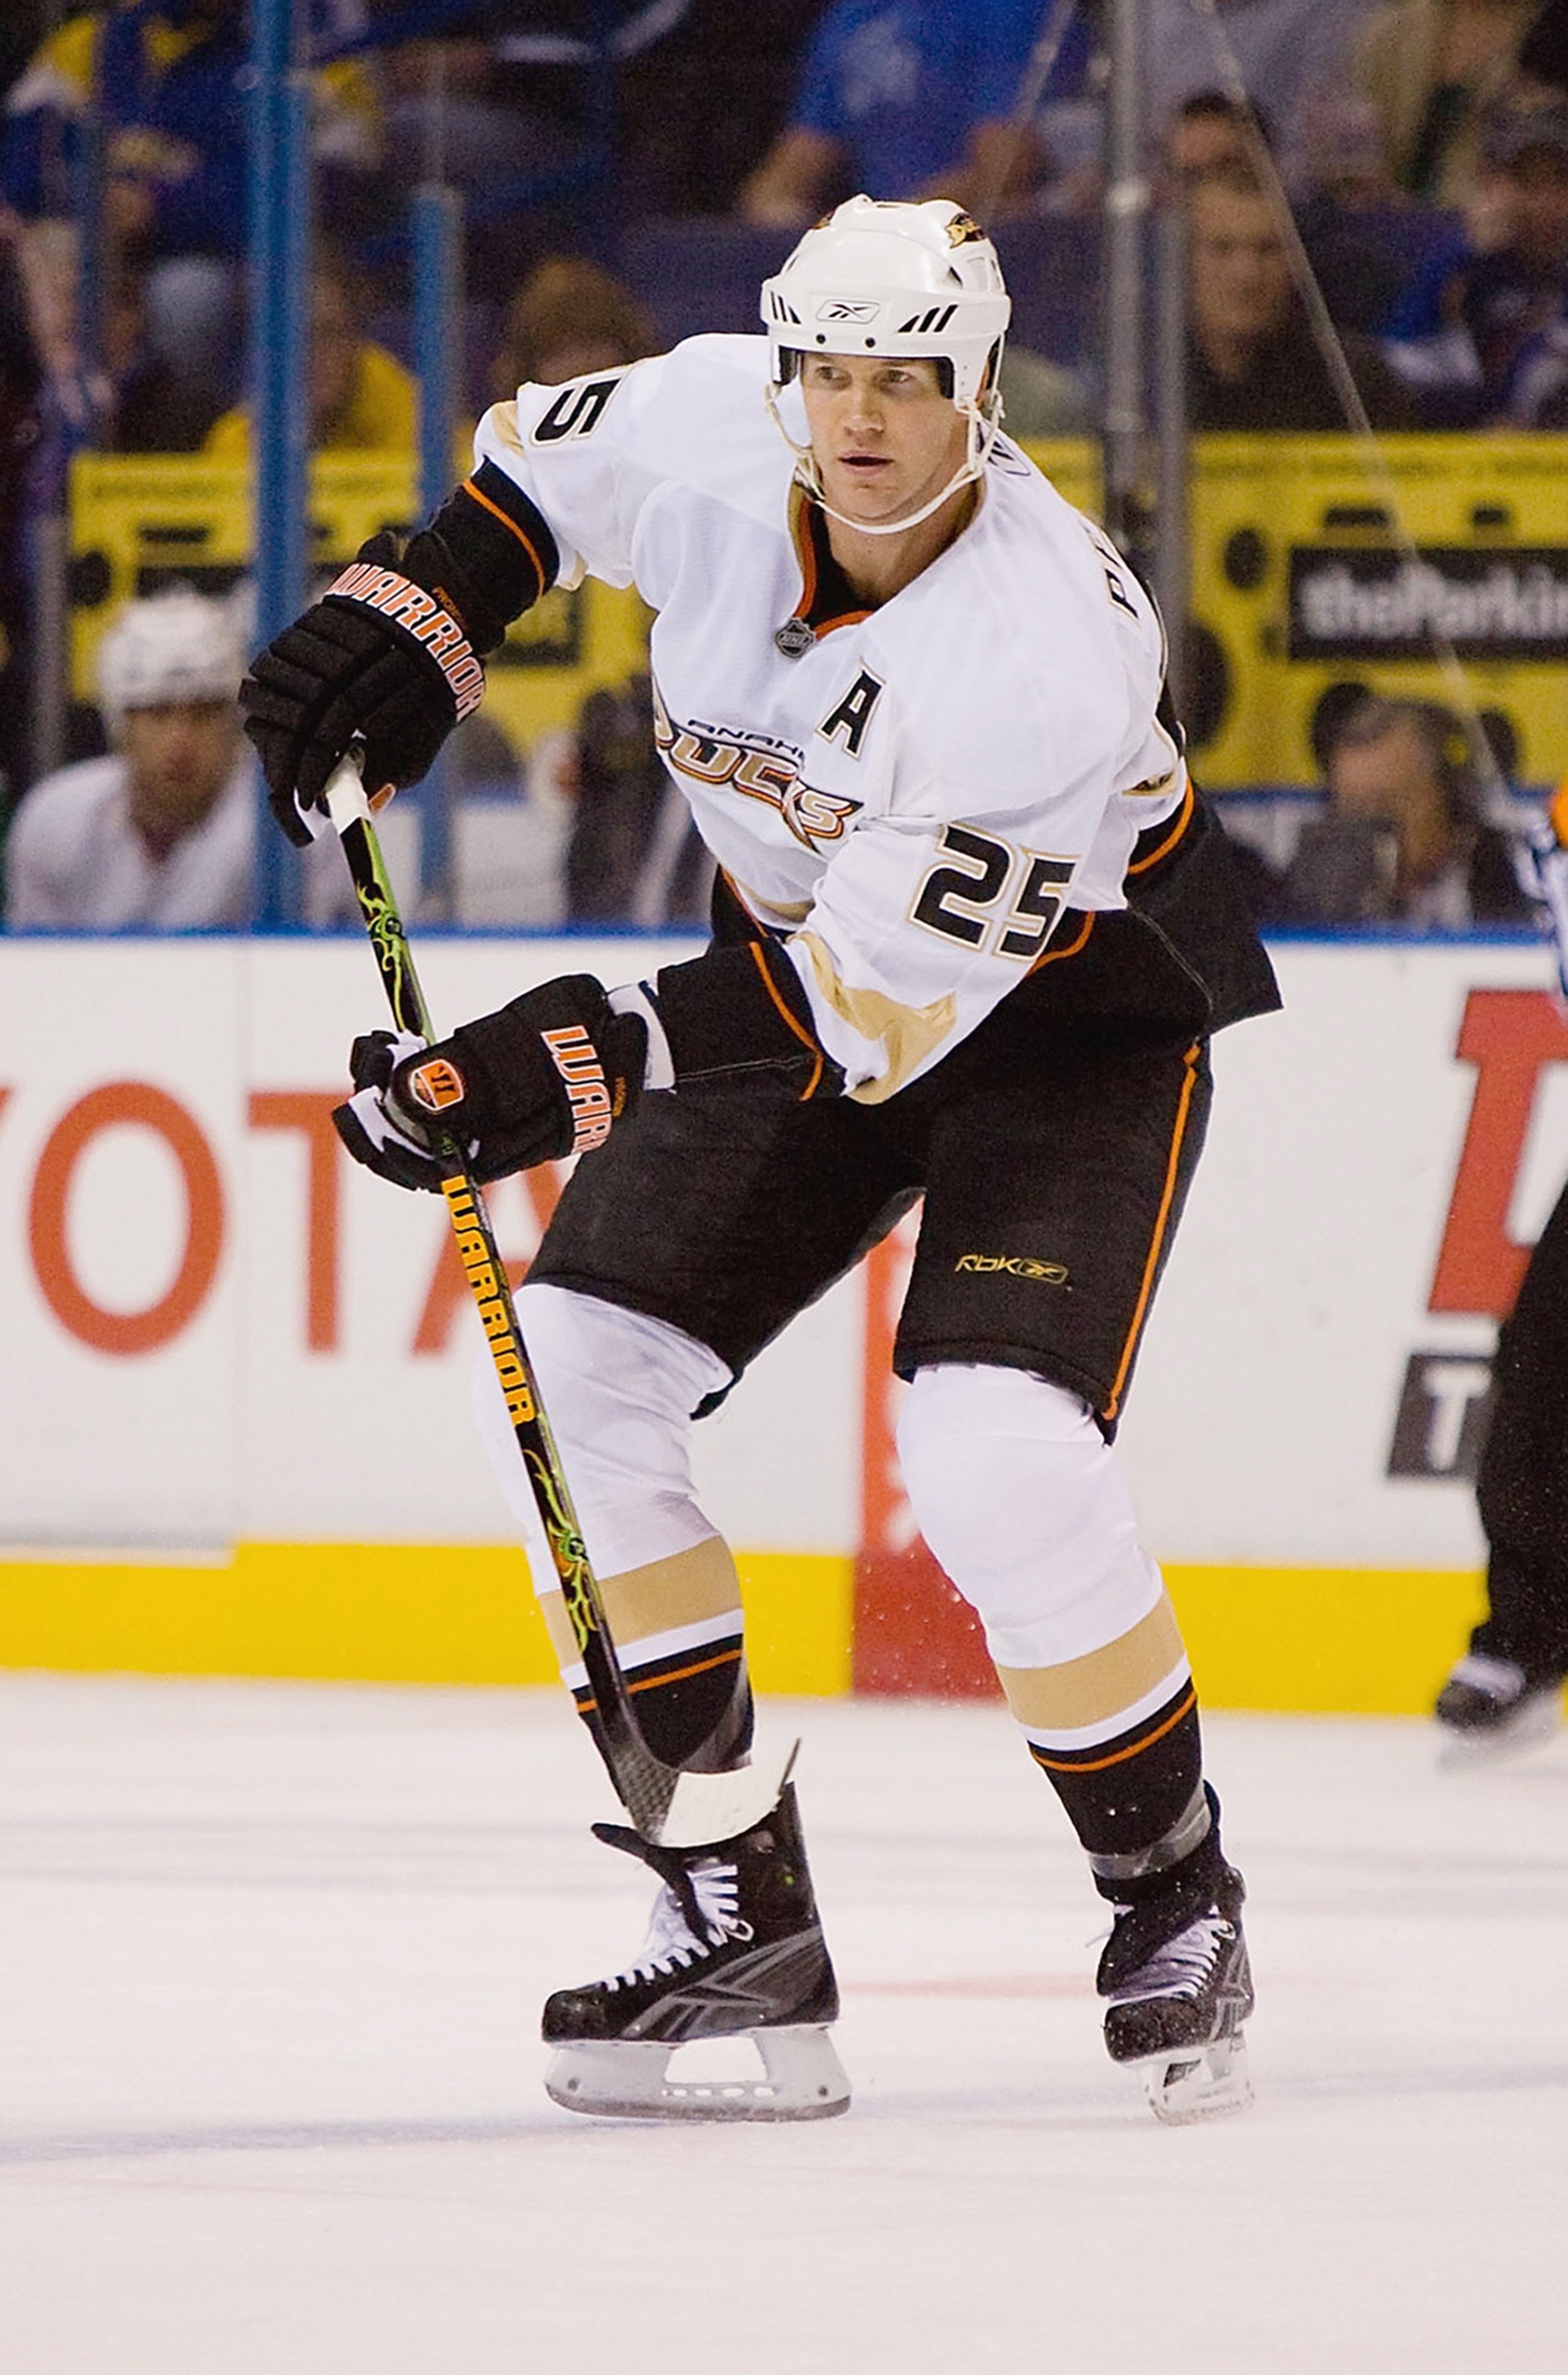 Anaheim Mighty Ducks Photo - National Hockey League (NHL) - Chris